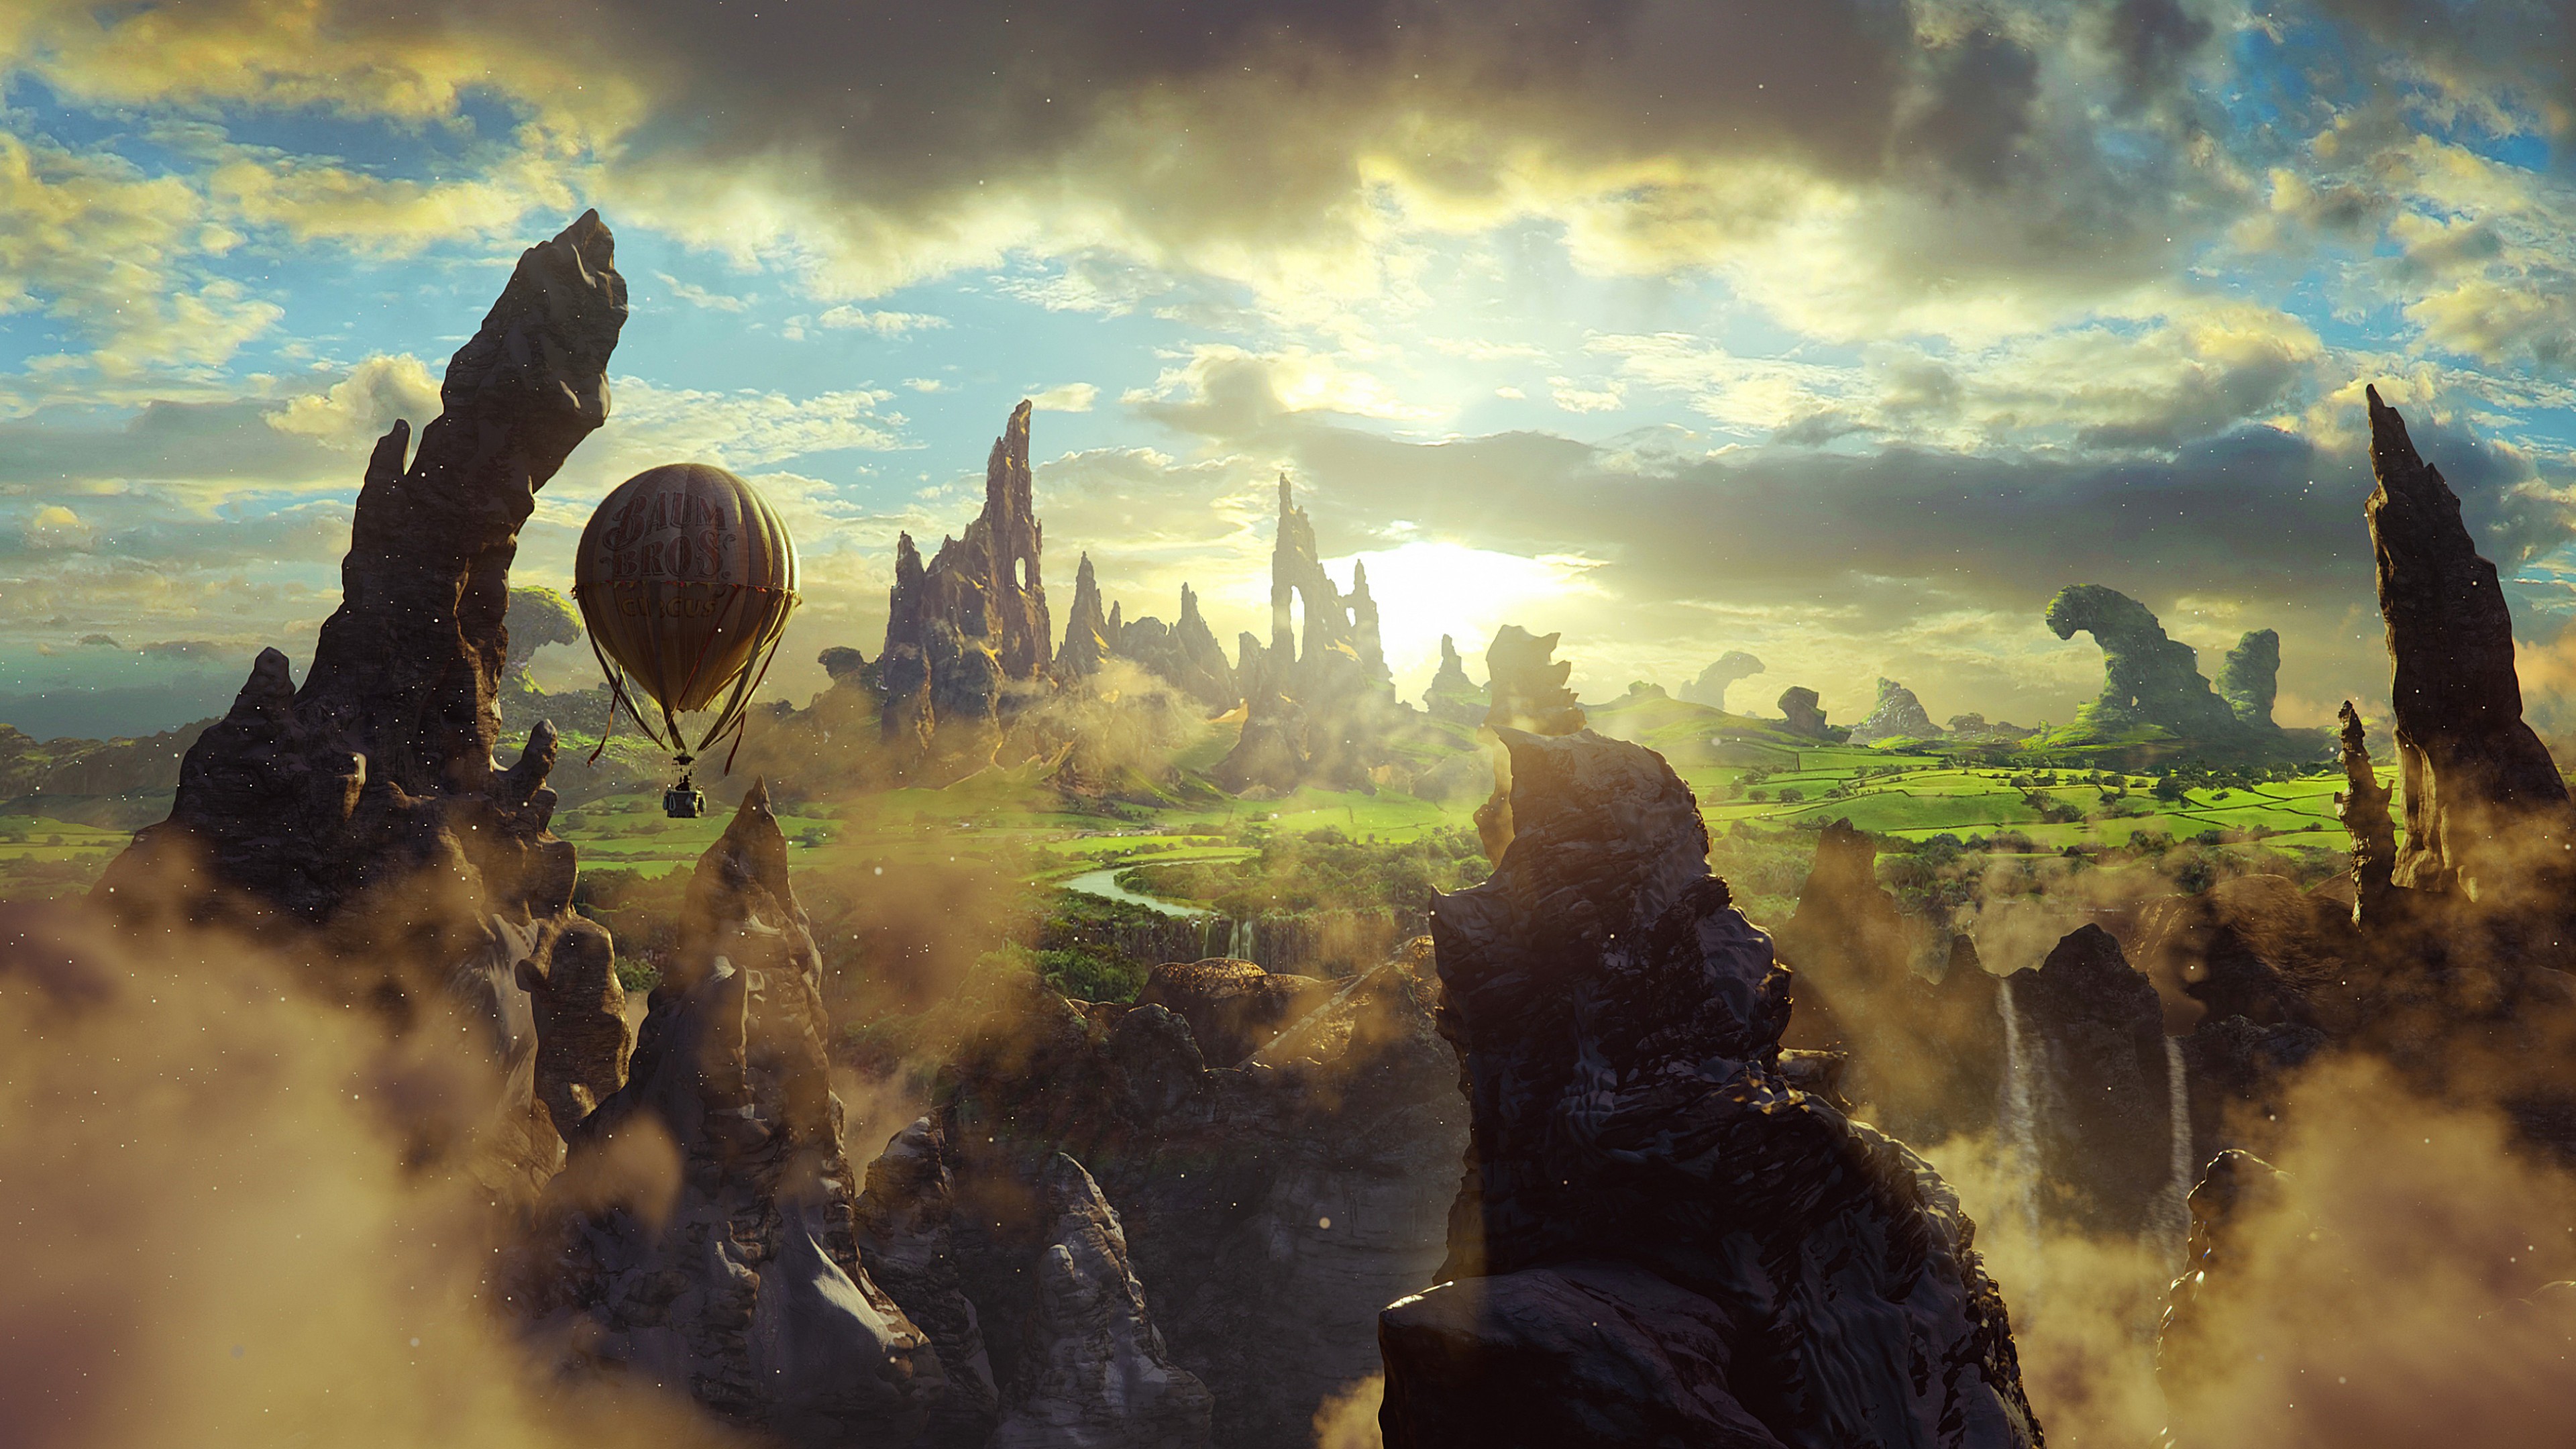 Fantasy Landscape 4k Ultra HD Wallpaper by Sevenics